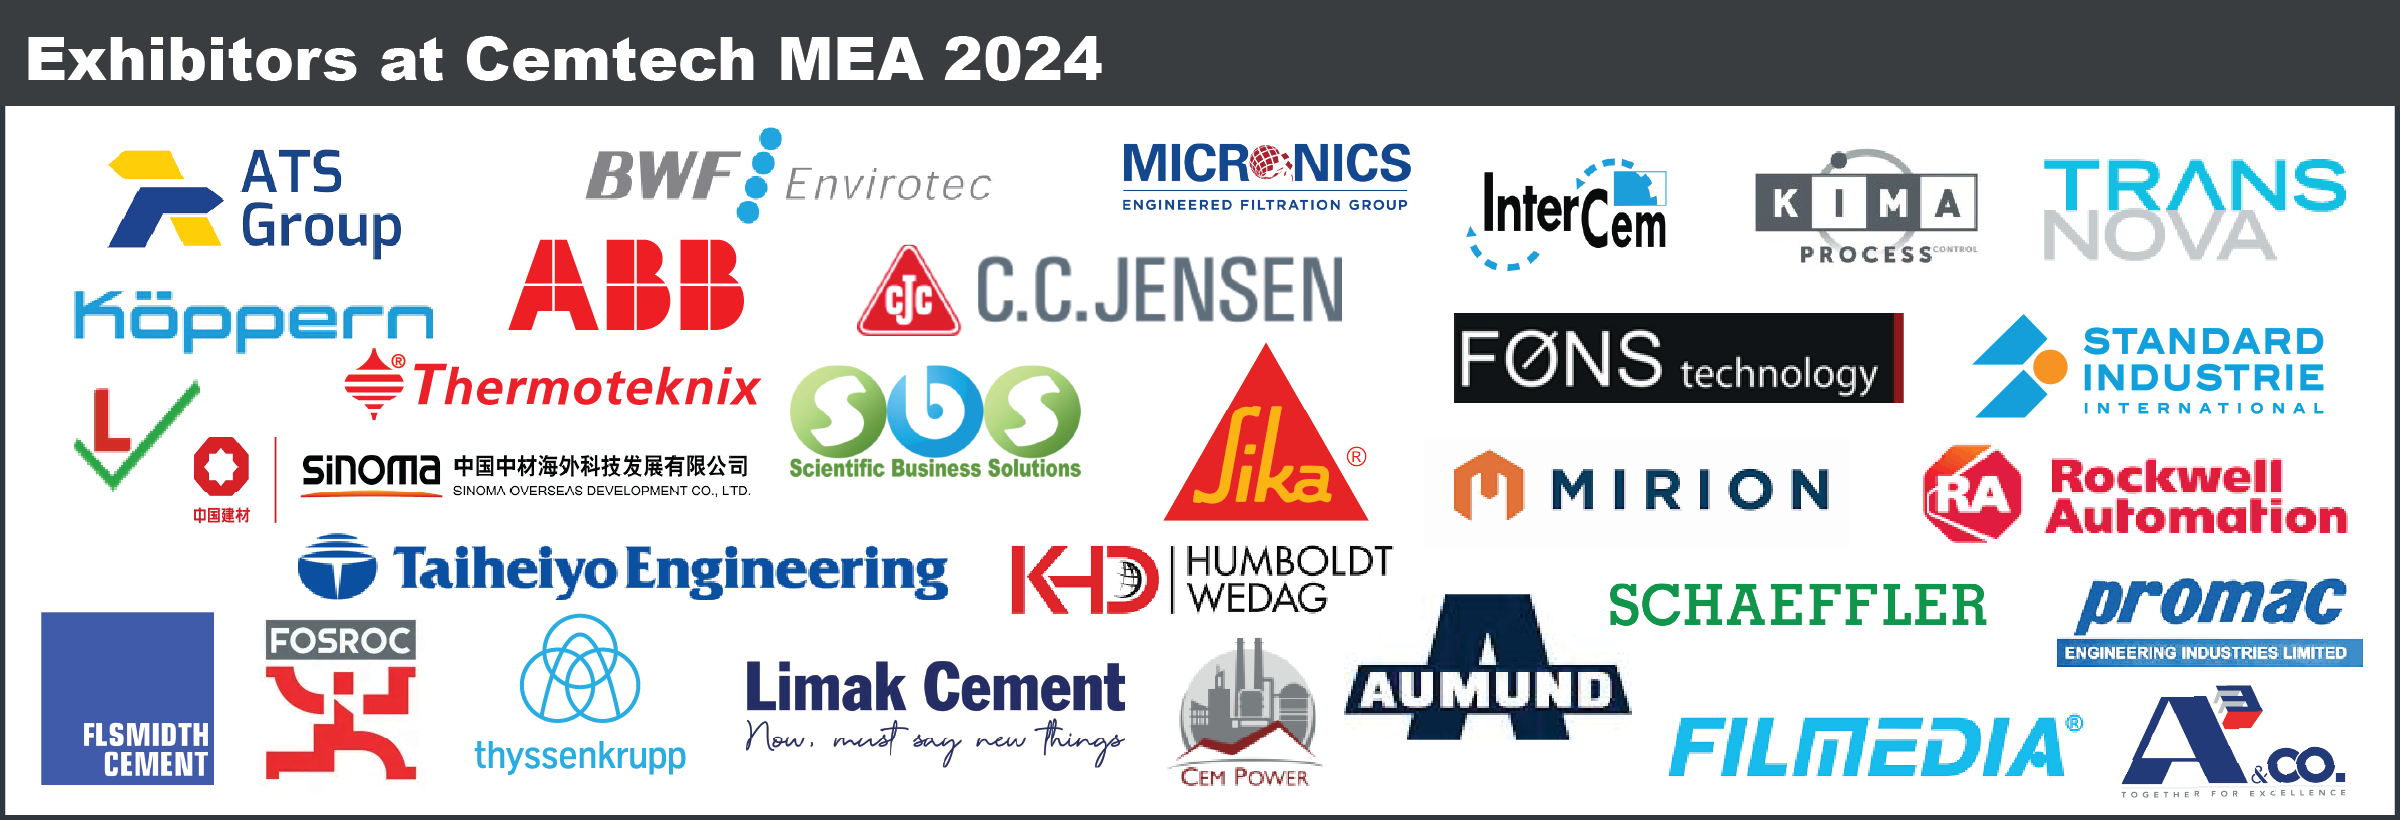 Exhibitors at Cemtech MEA 2024